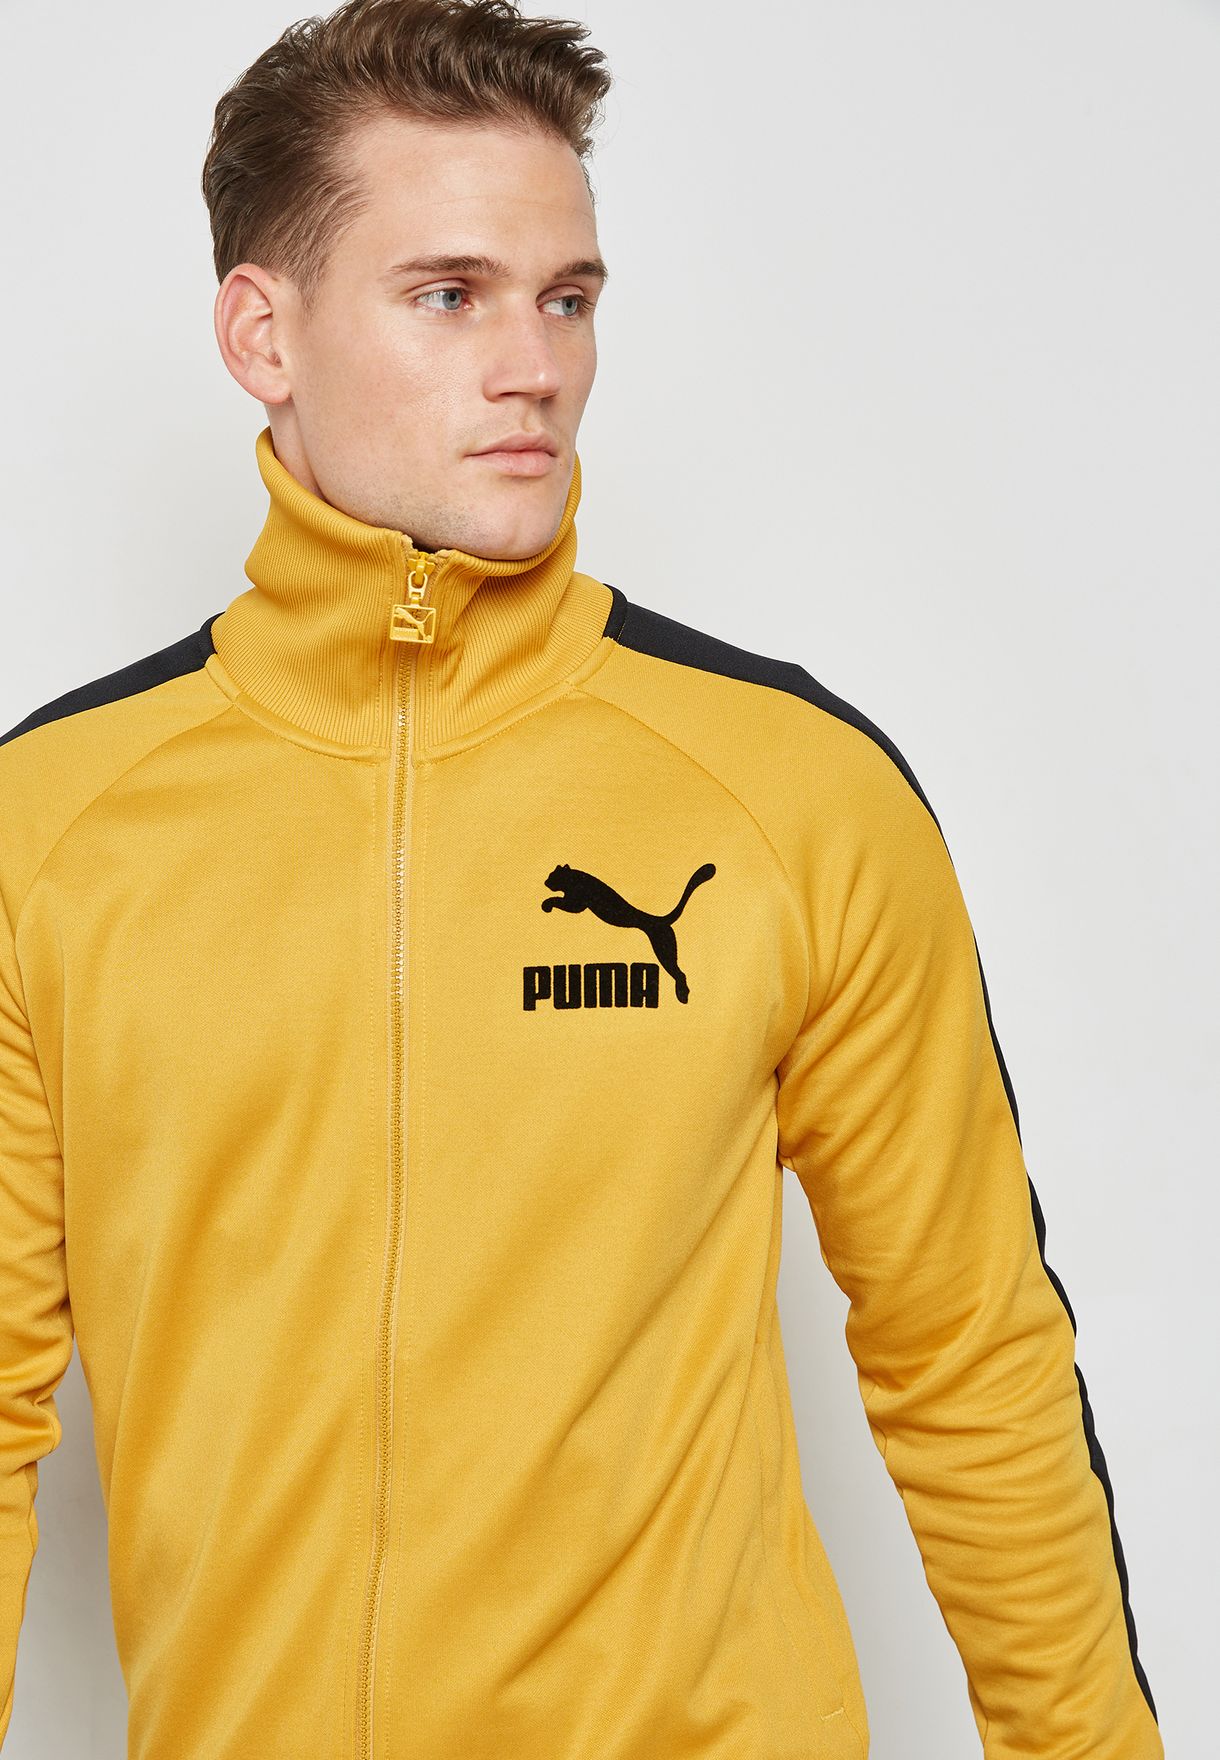 puma t7 track jacket yellow - 55% OFF 